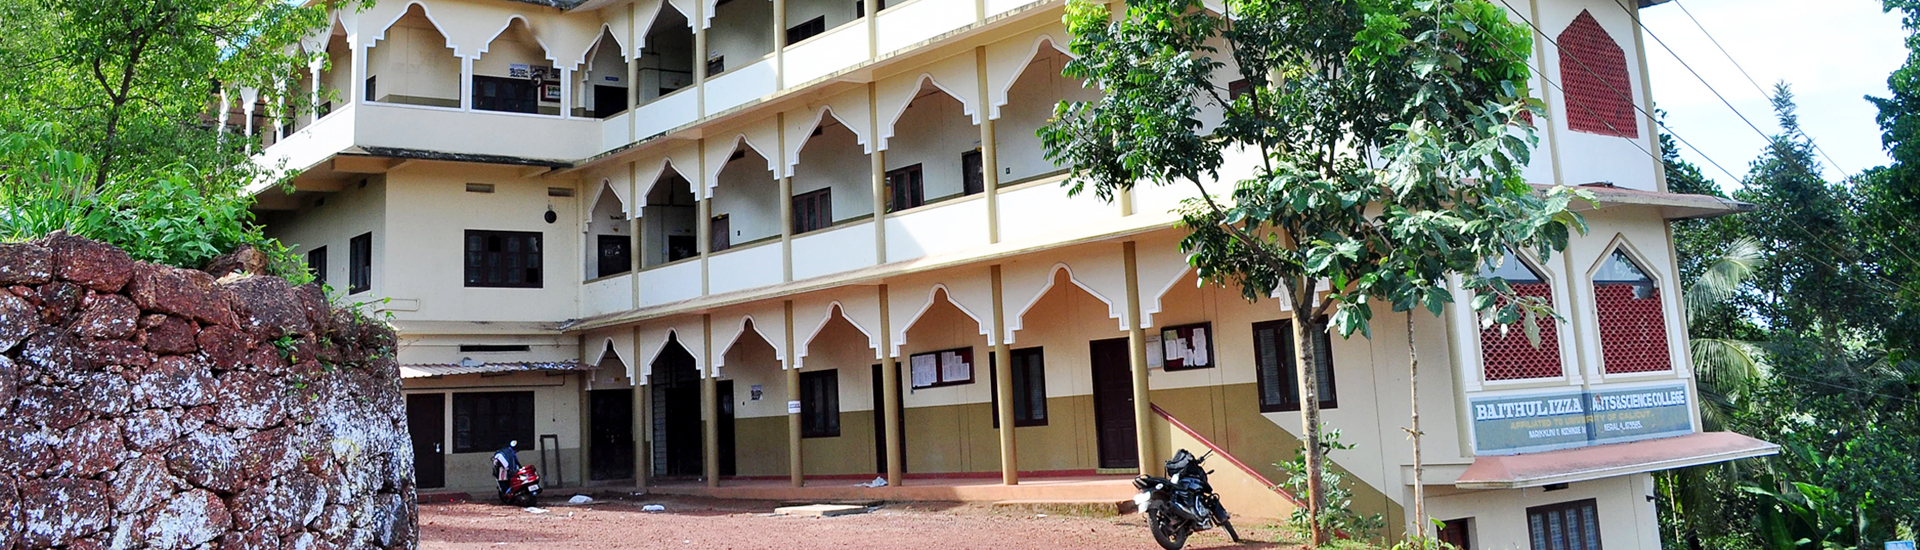 Baithul Izza Arts and Science College, Kozhikode Image